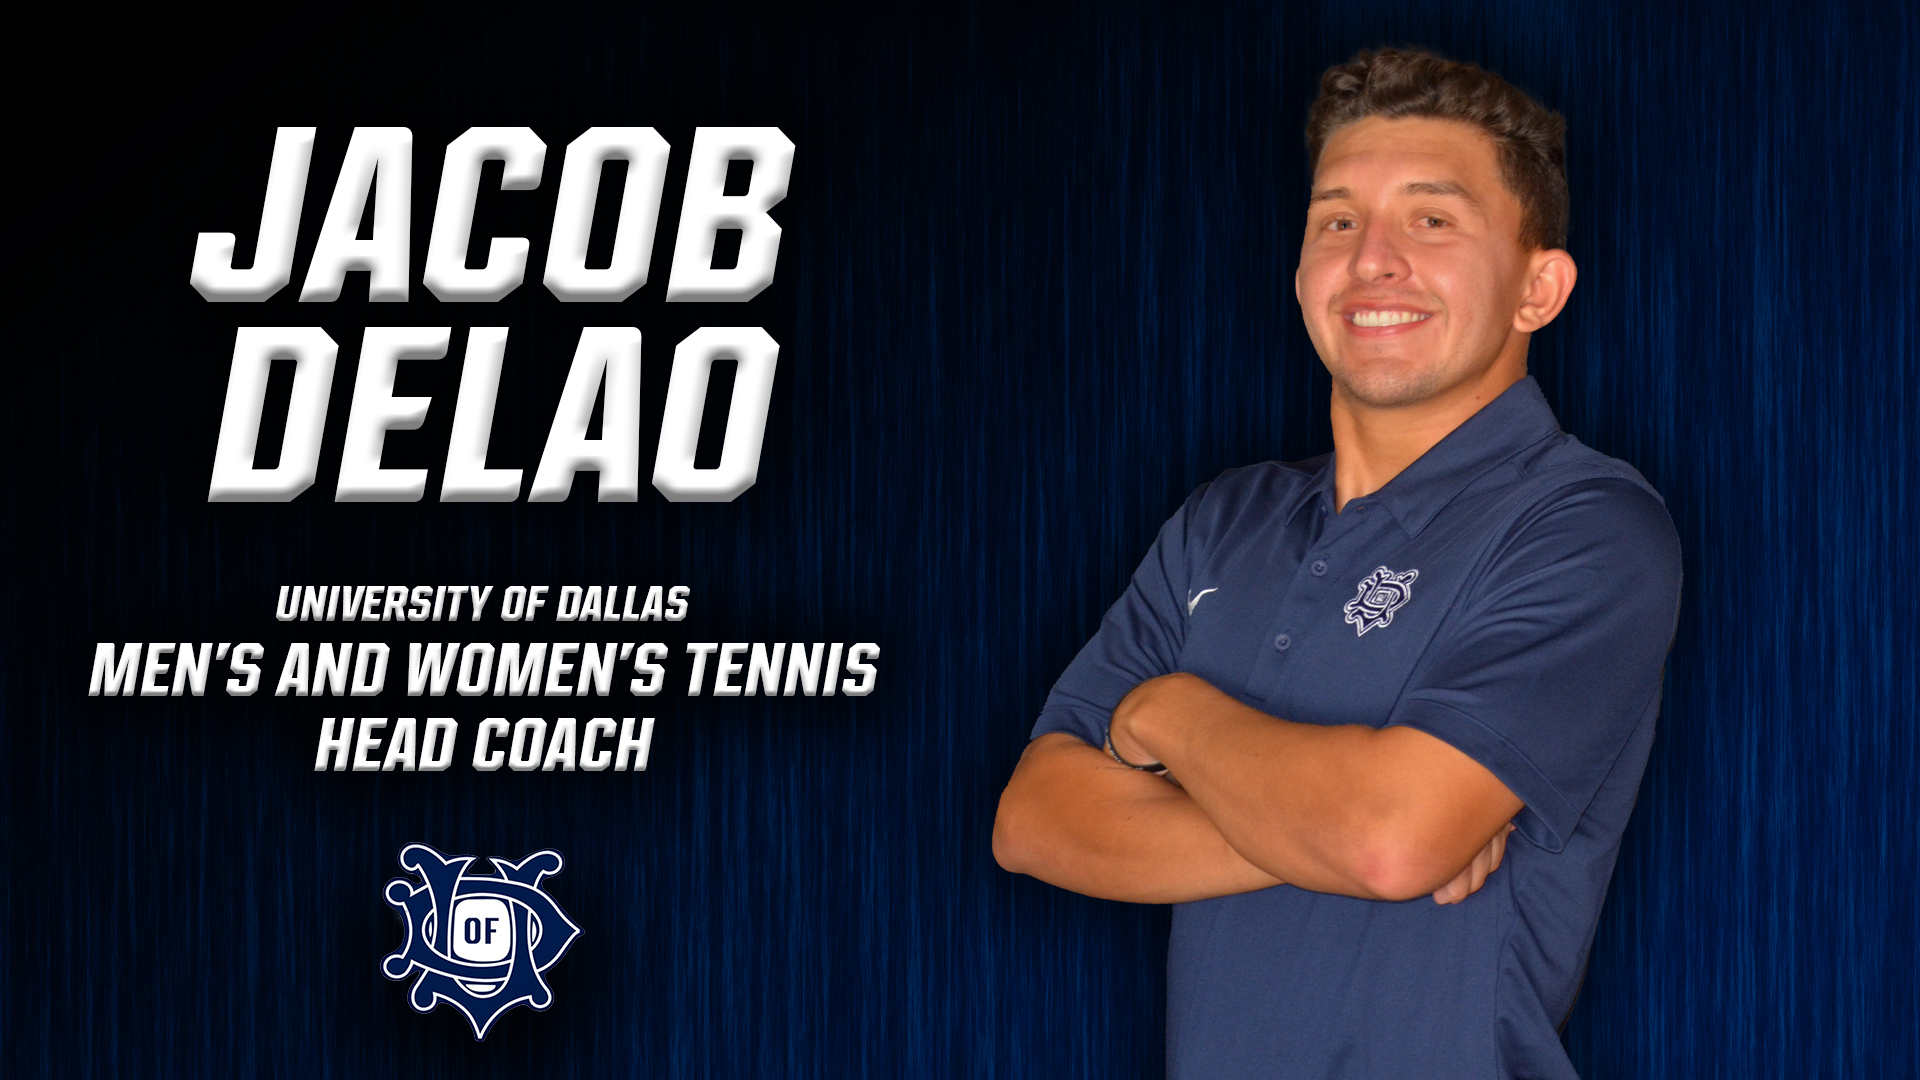 Jacob Delao Named Head Coach of Men's and Women's Tennis